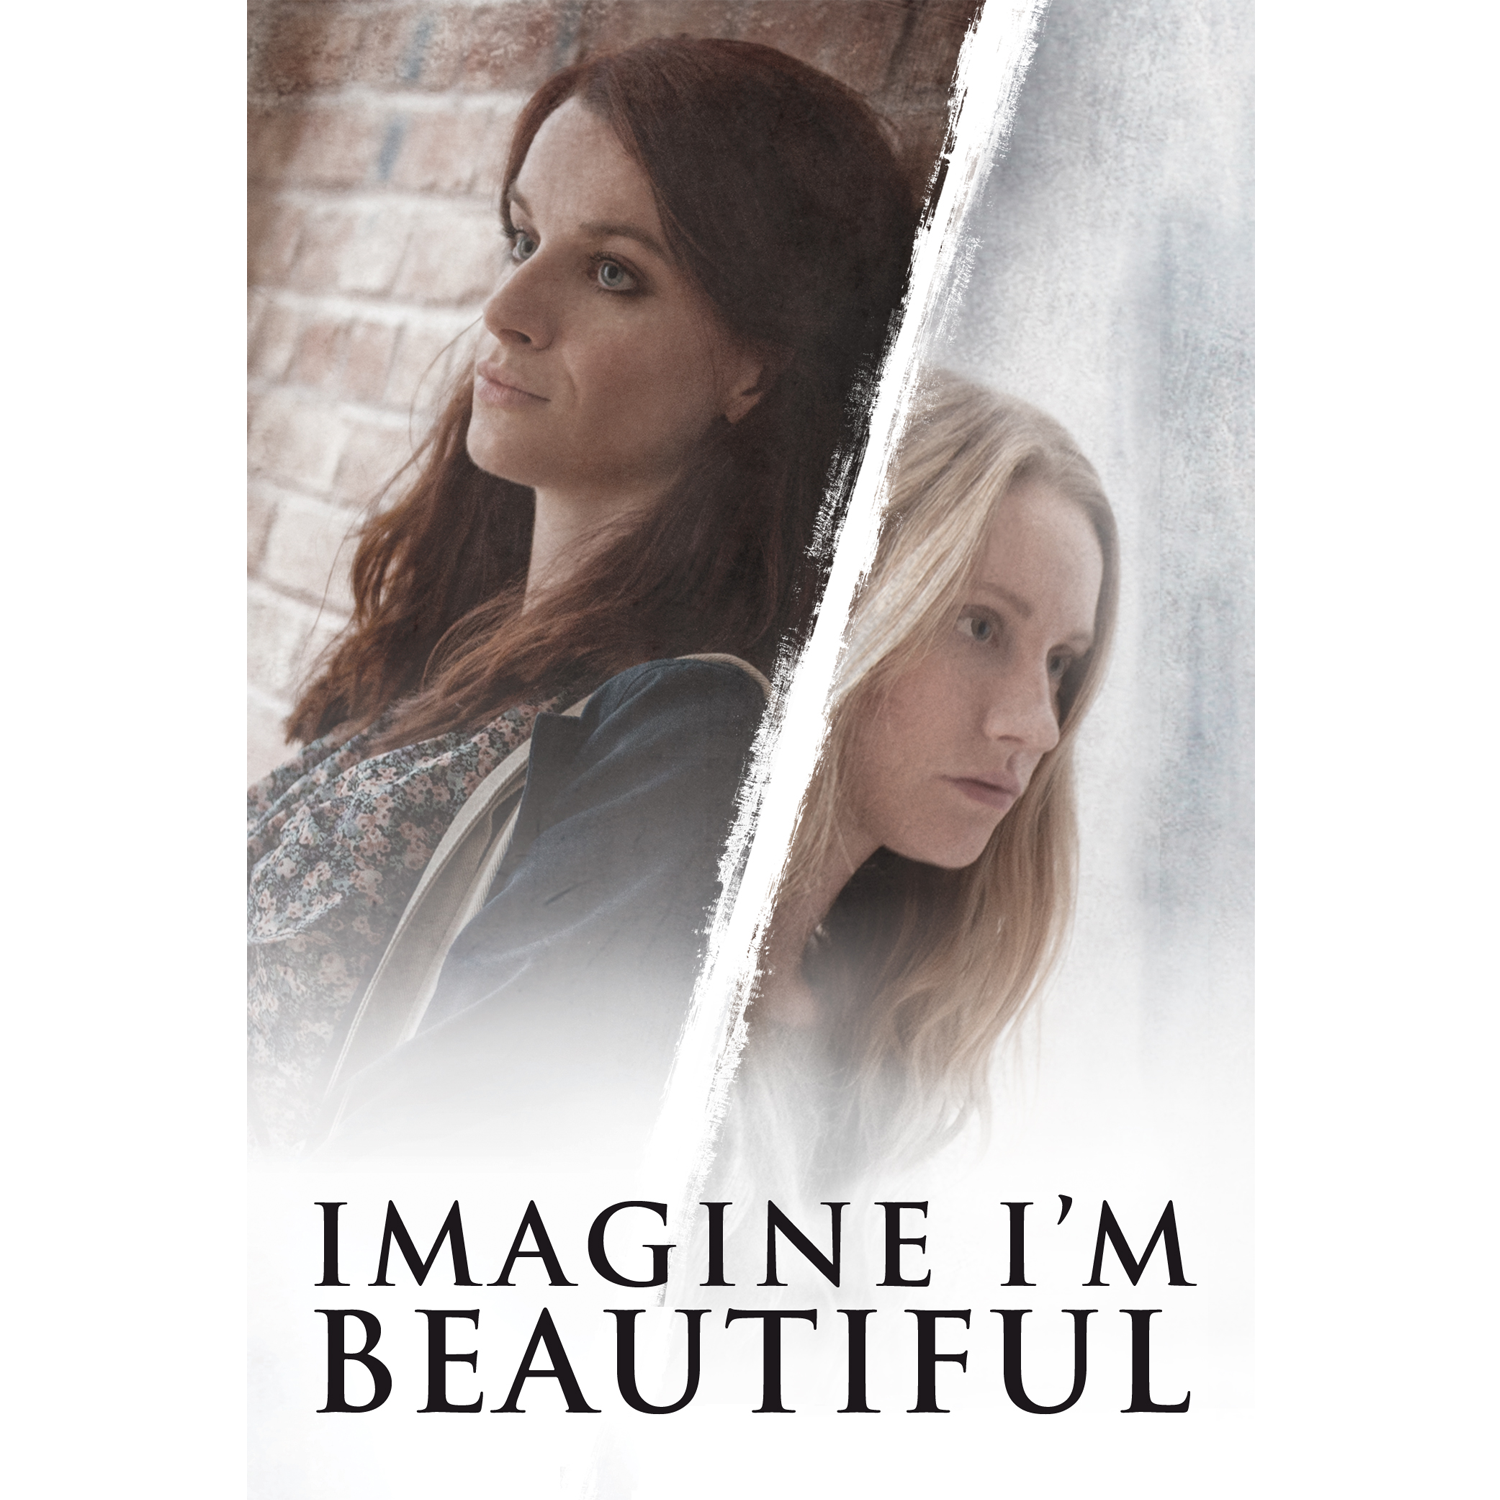 Imagine Im Beautiful Free Movies Download Watch Movies Online